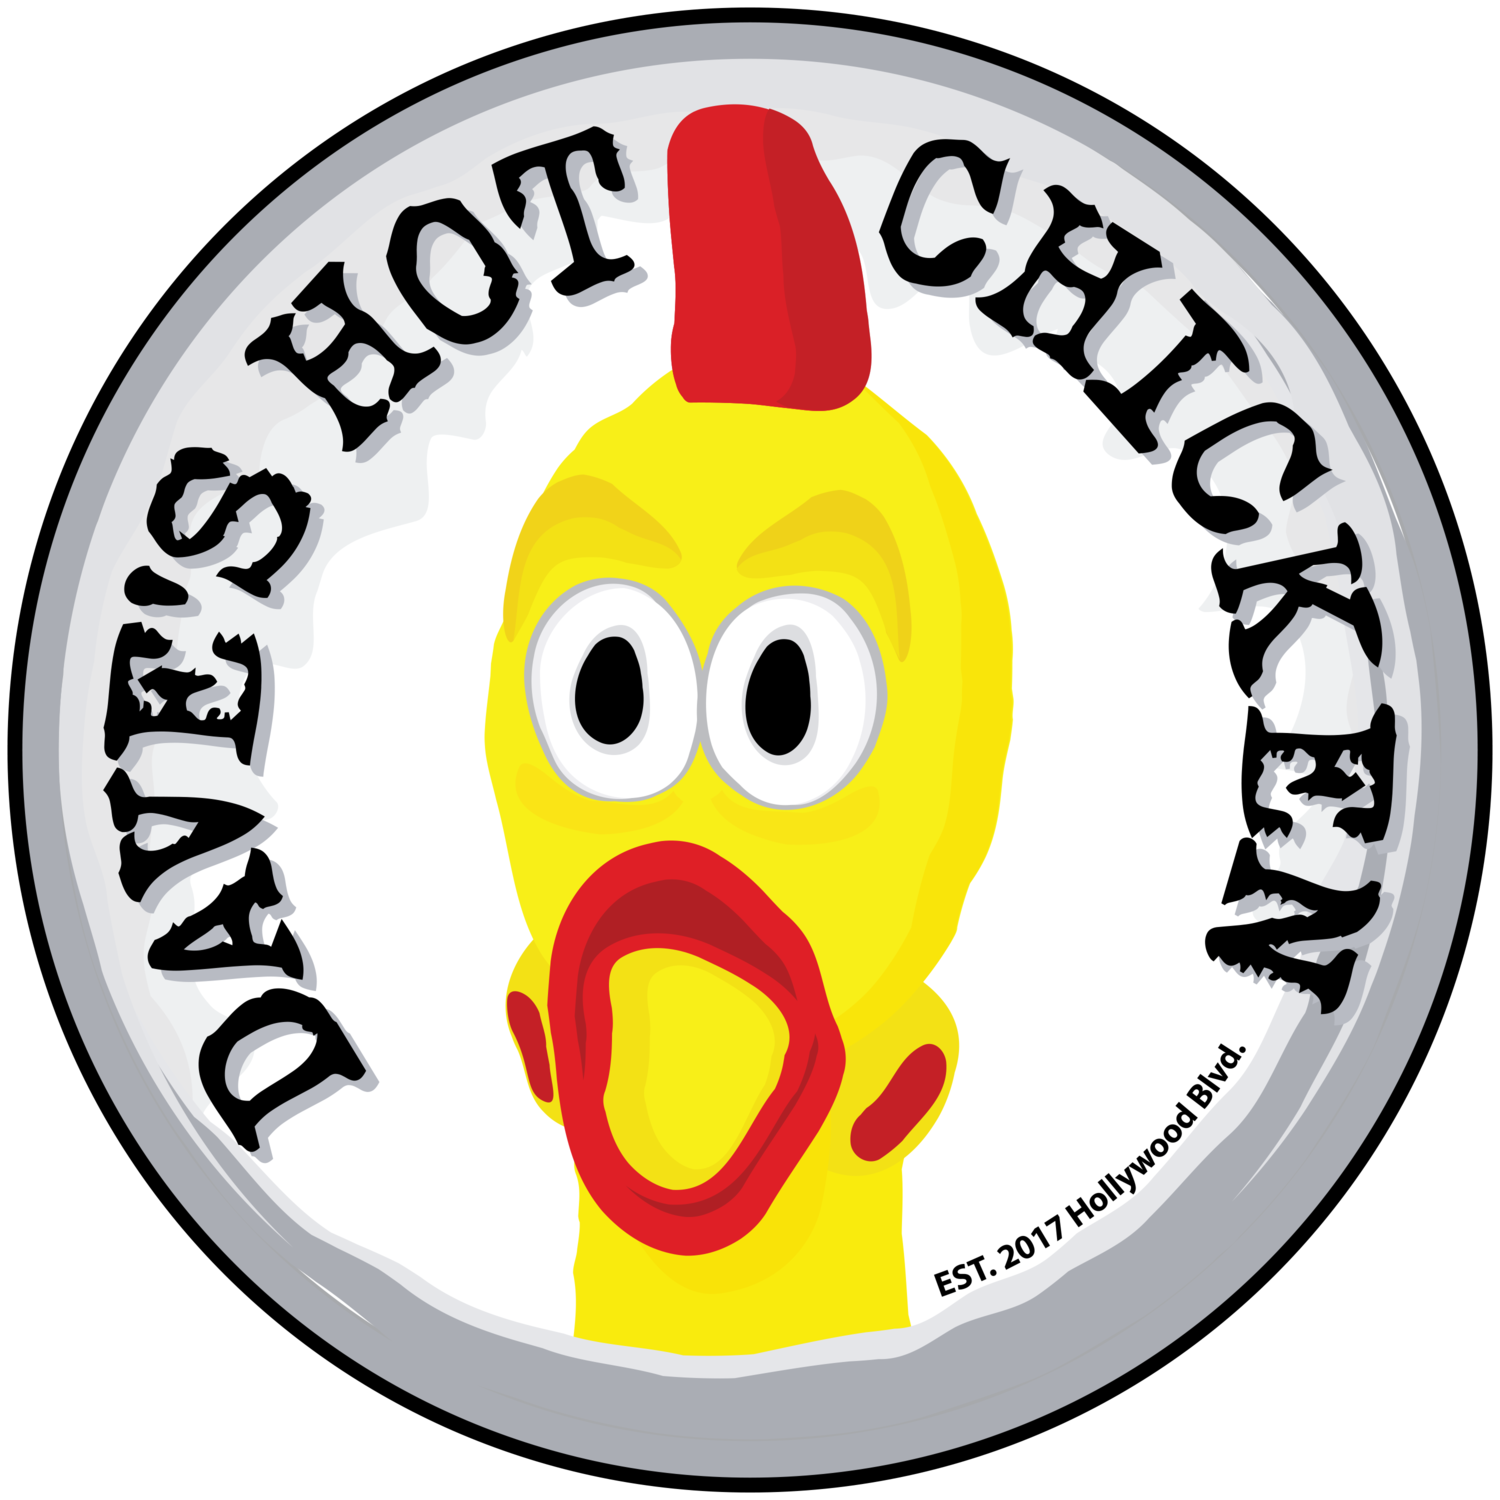 Dave's hot chicken vs angry chickz